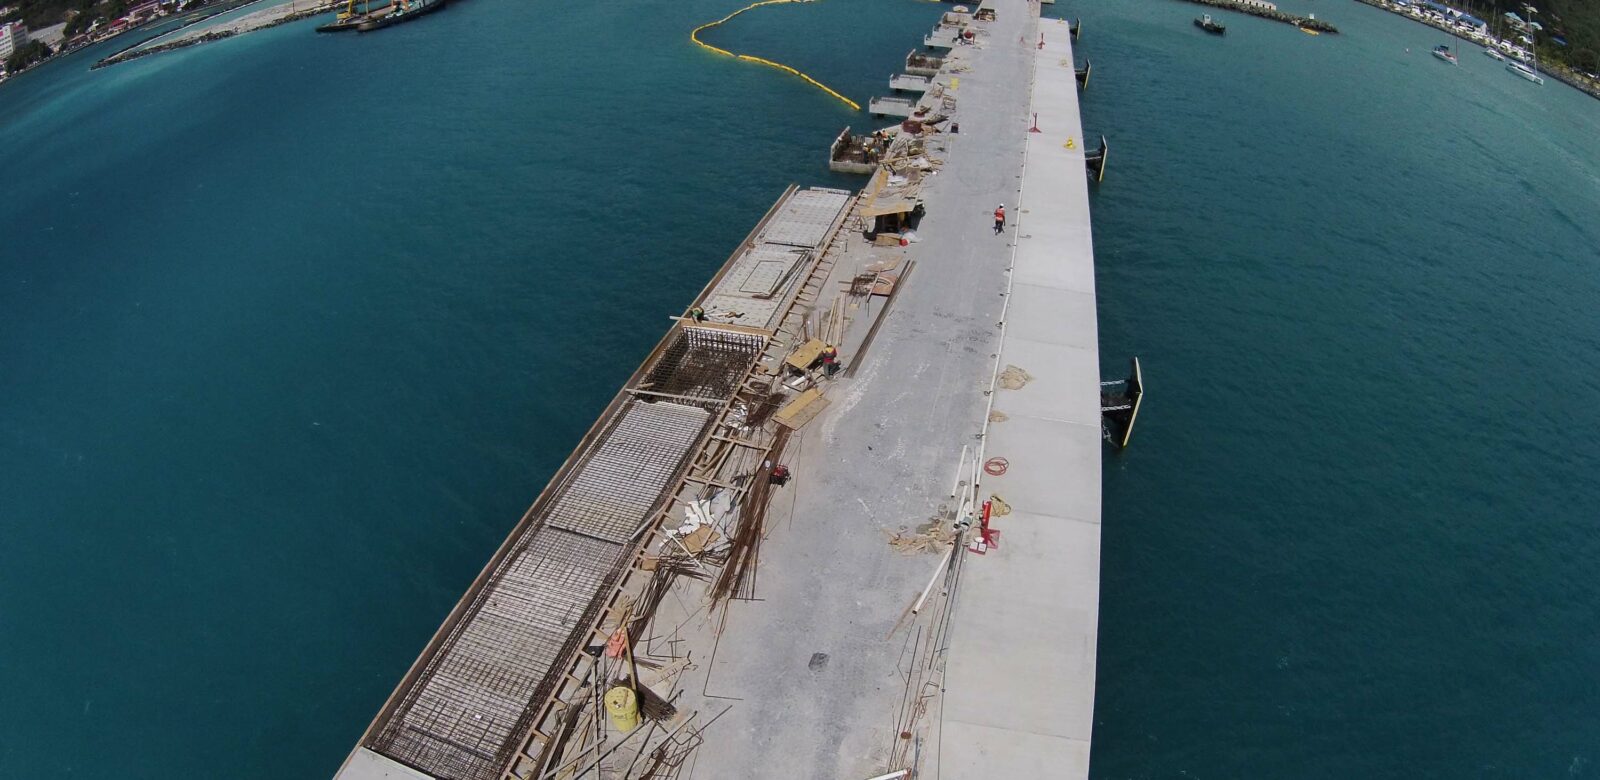 British Virgin Islands (BVI) Cruise Ship Pier Expansion